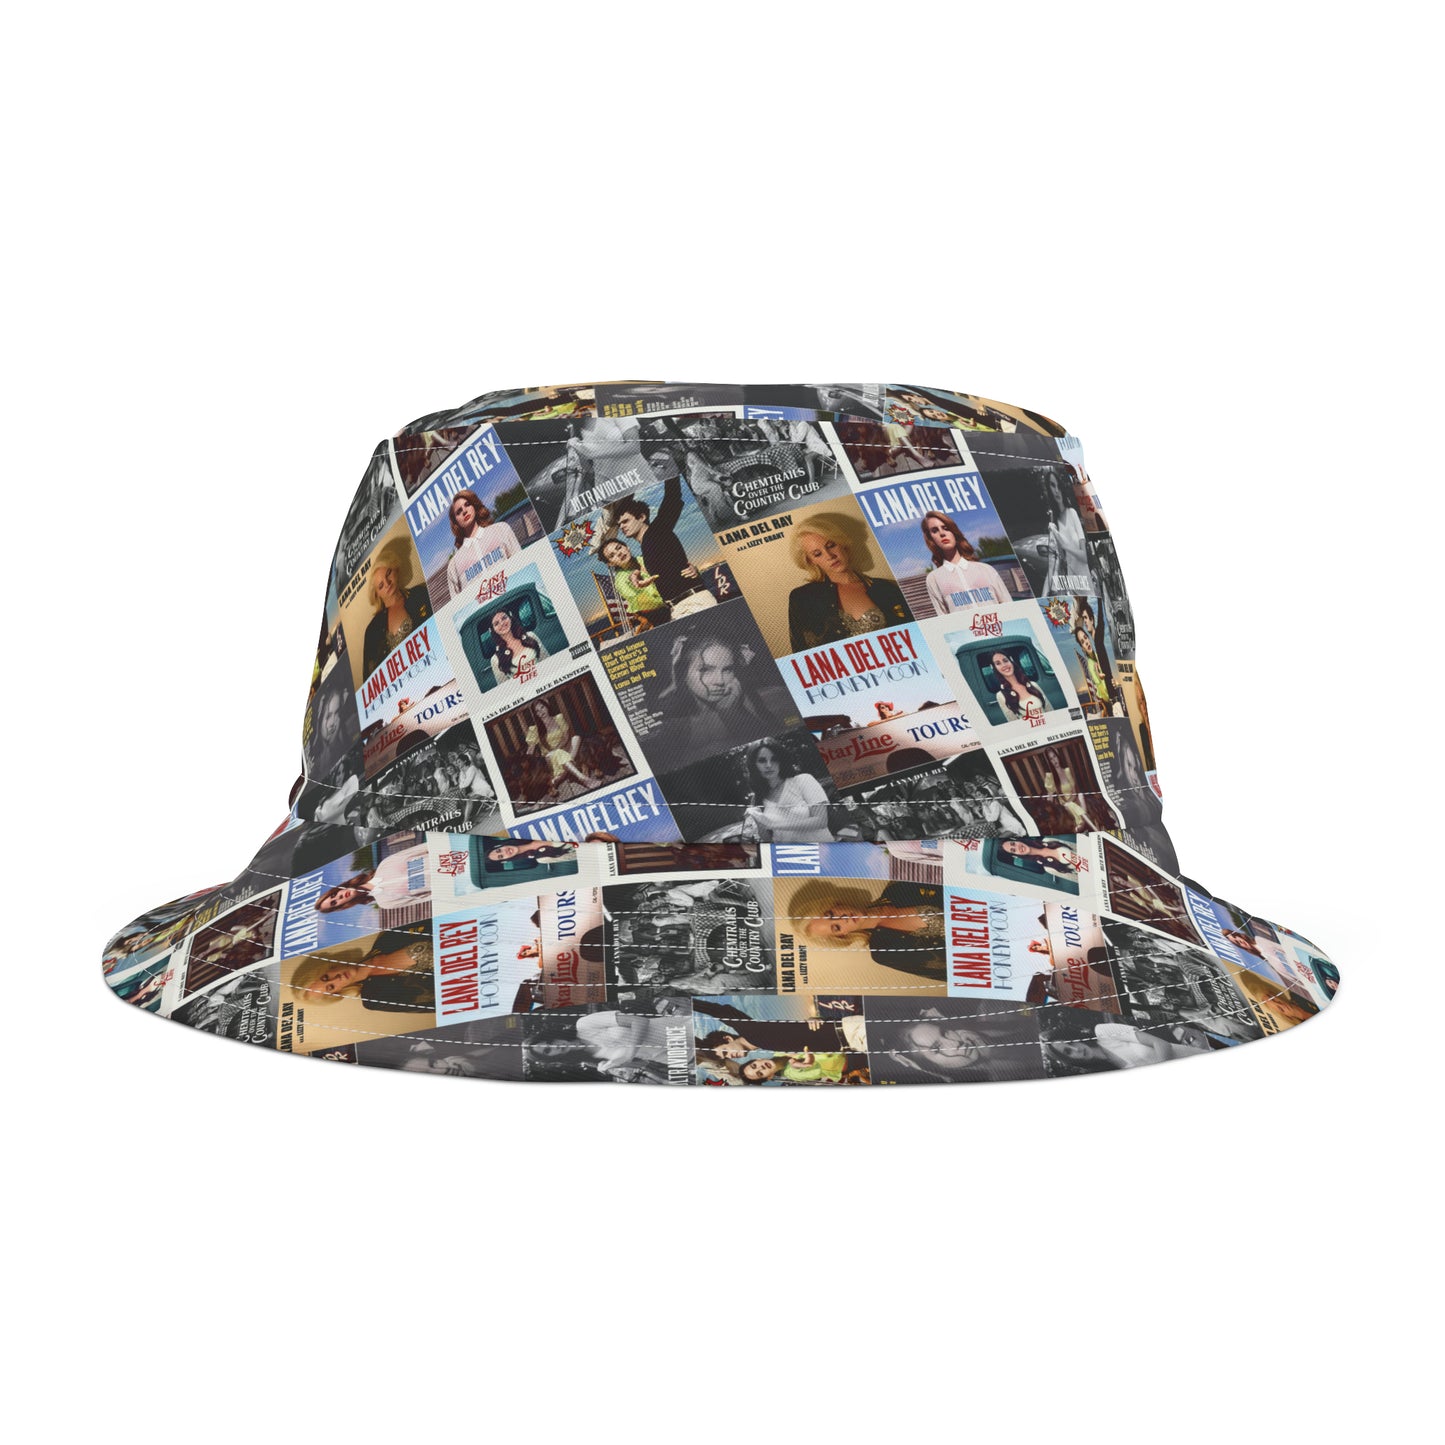 Lana Del Rey Album Cover Collage Bucket Hat